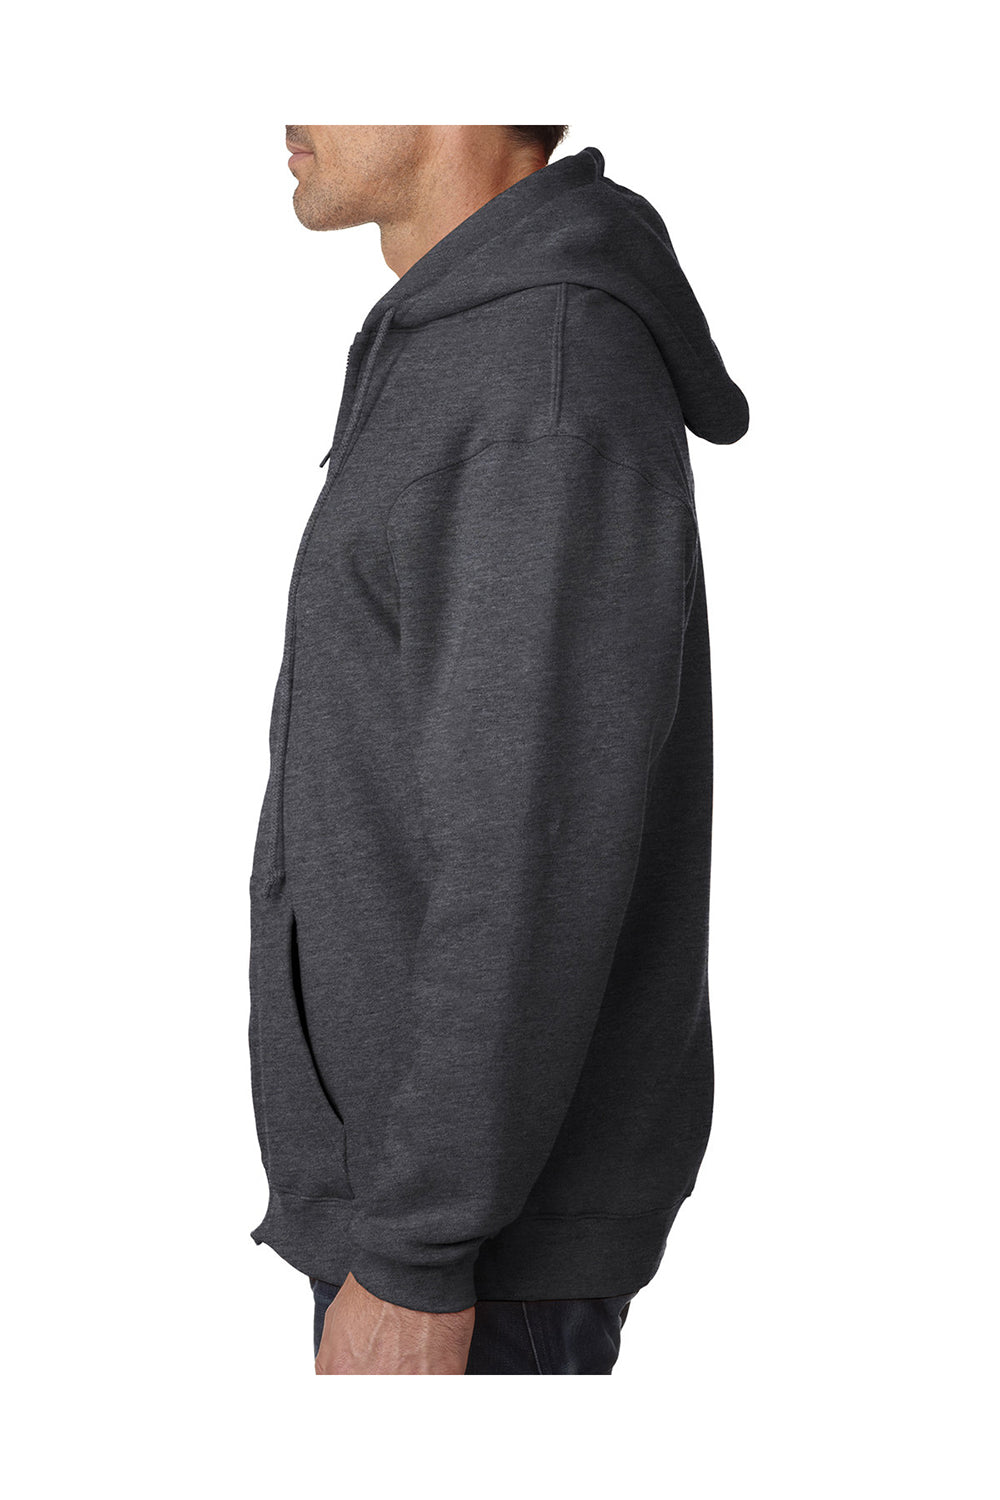 Bayside BA900 Mens USA Made Full Zip Hooded Sweatshirt Hoodie Heather Charcoal Grey Model Side